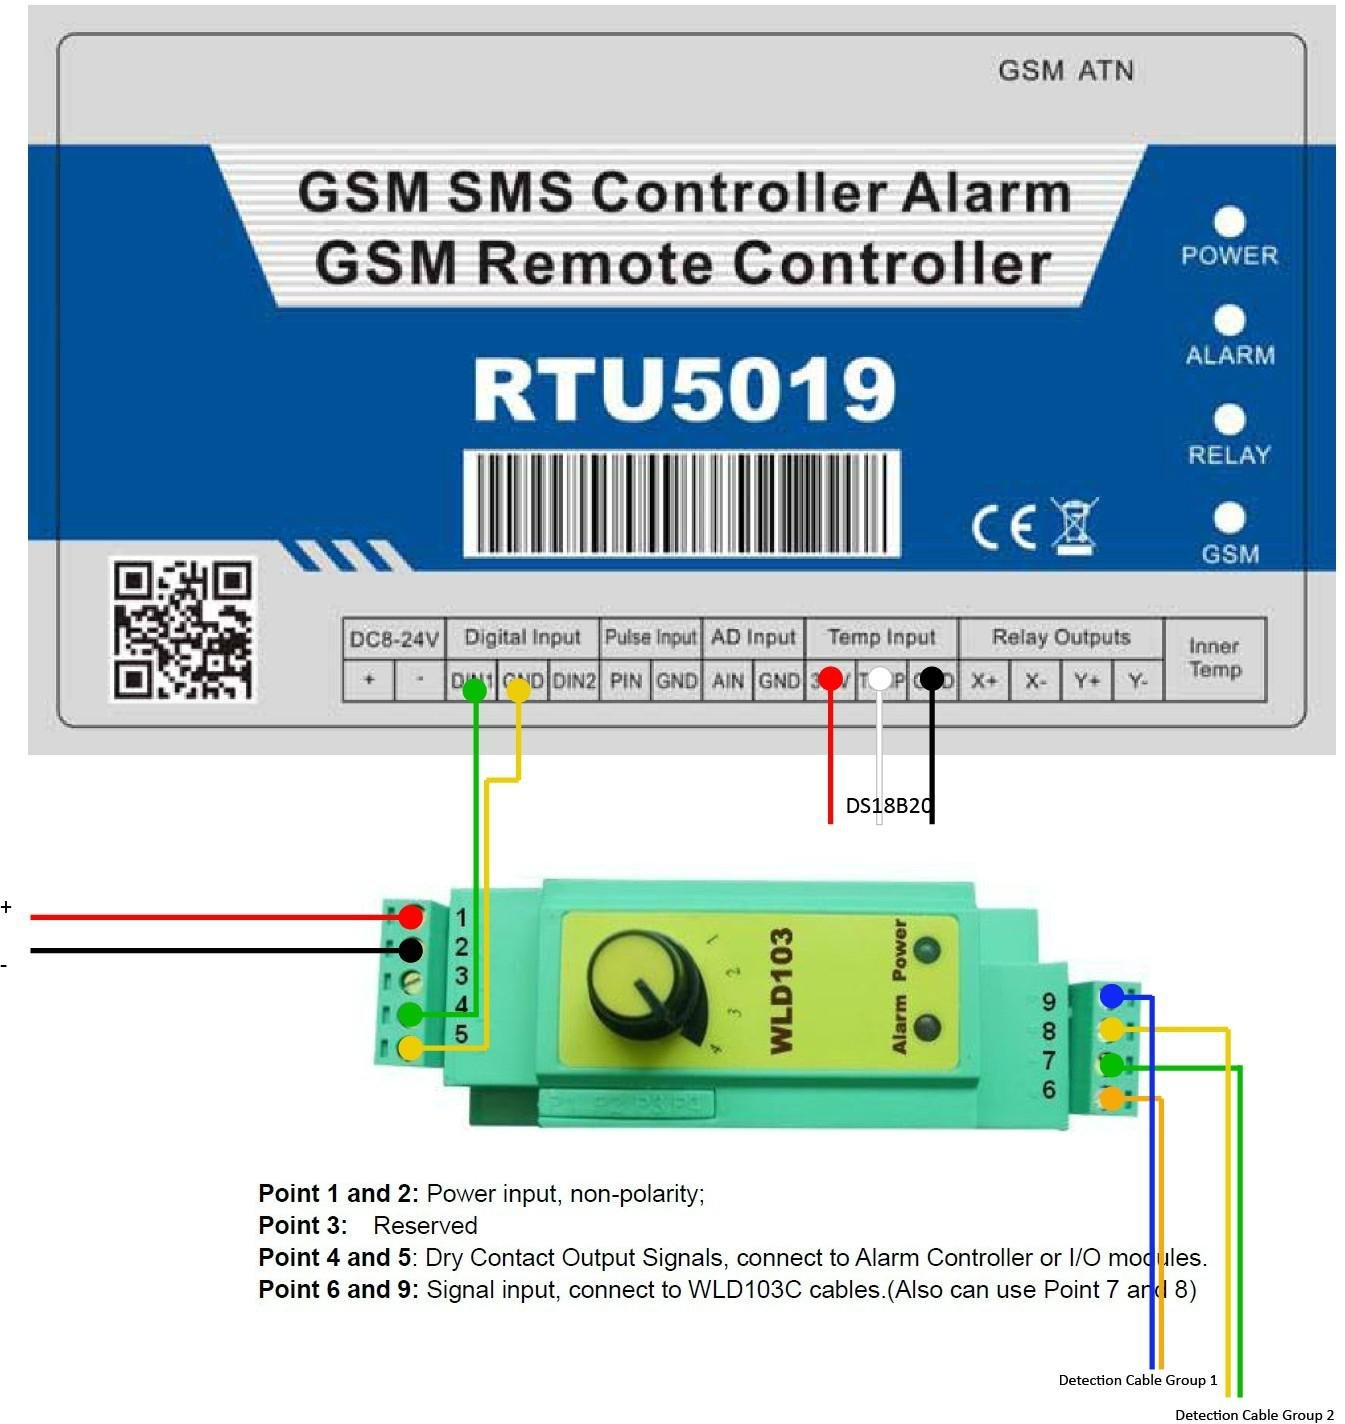 GSM SMS Controller Alarm GSM SMS RTU 4